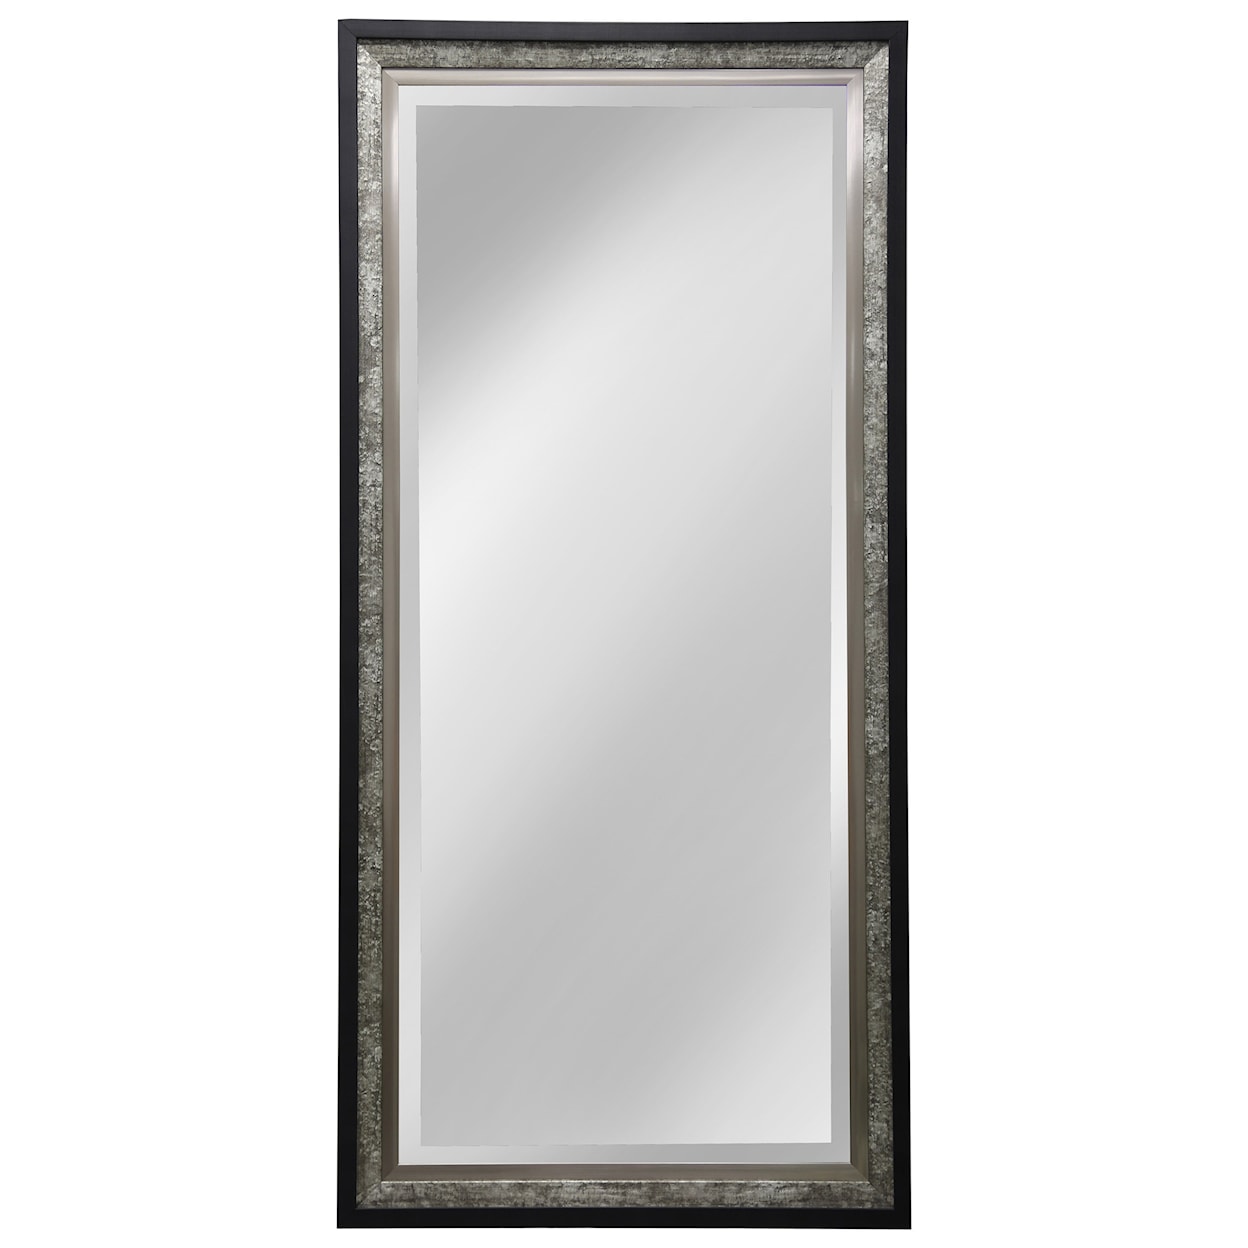 StyleCraft Mirrors Silver And Black Wood Framed Mirror